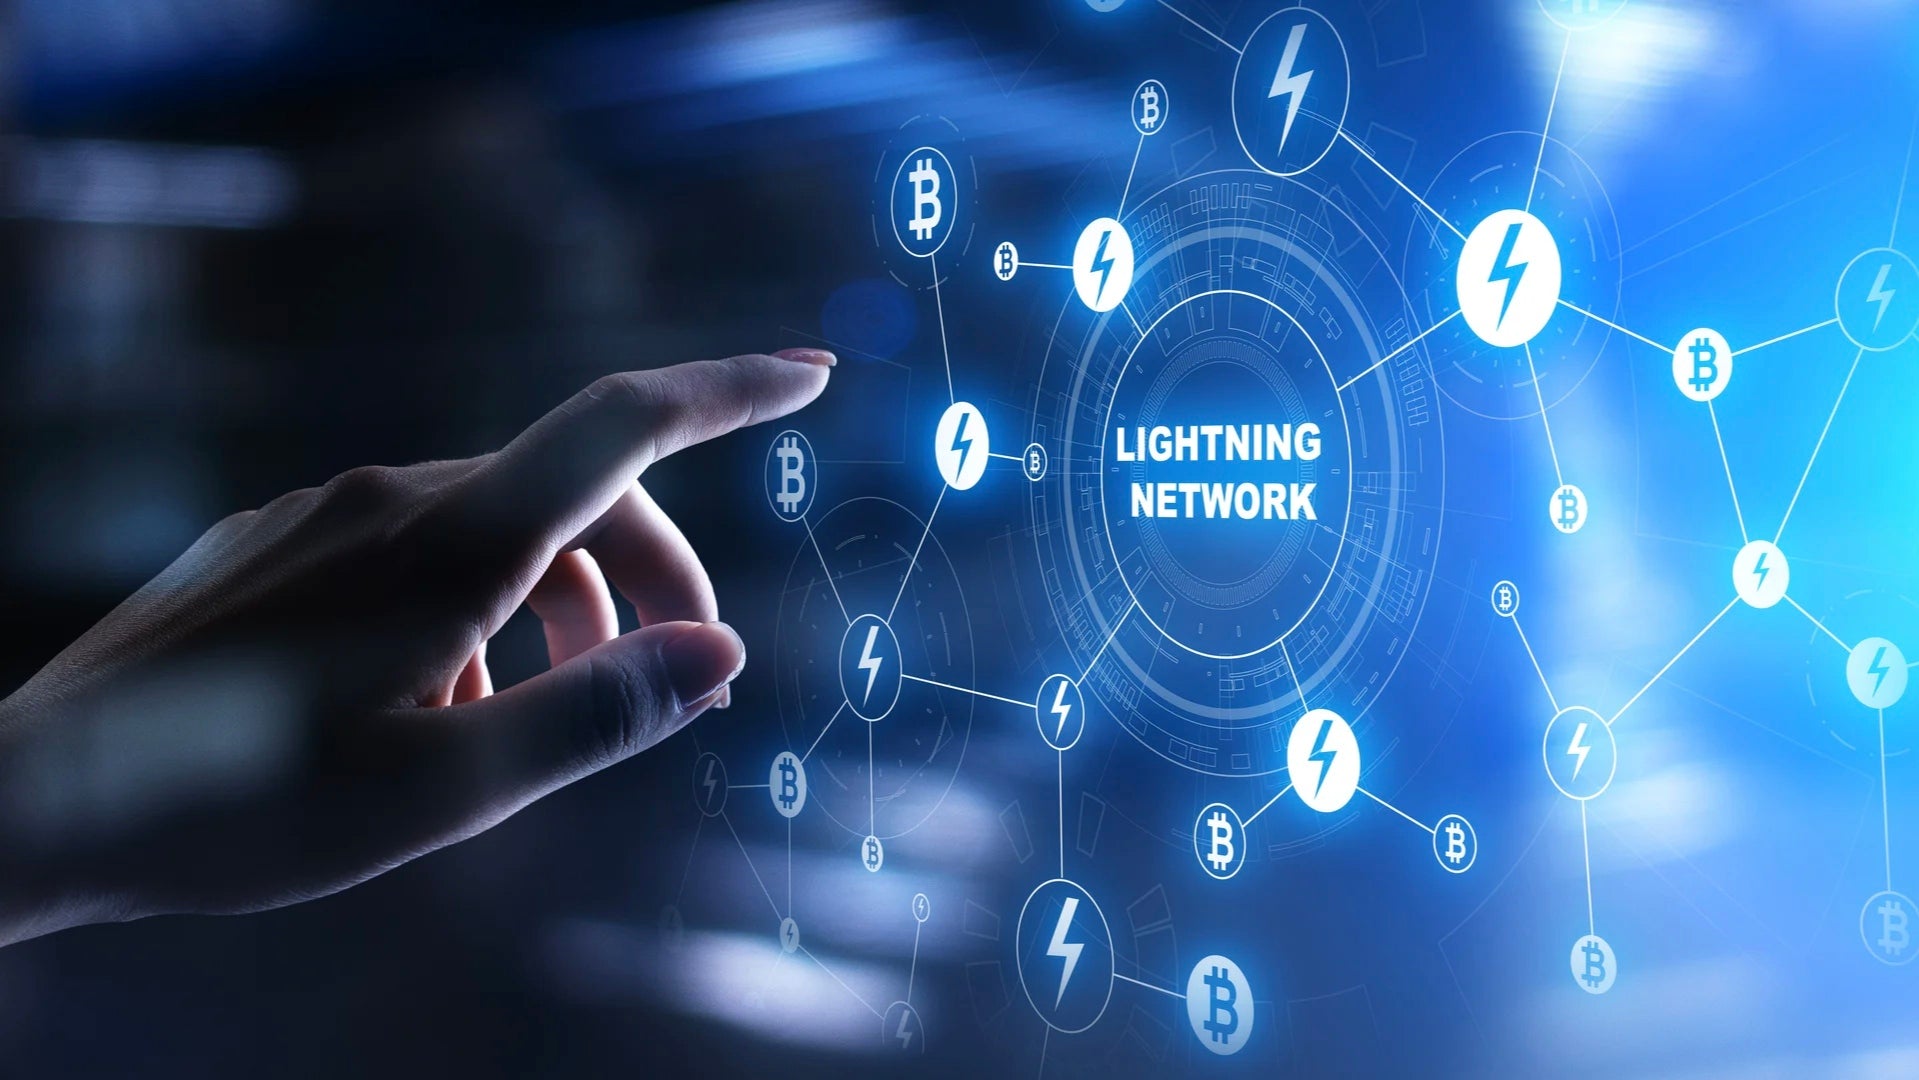 Exploring the Lightning Network.